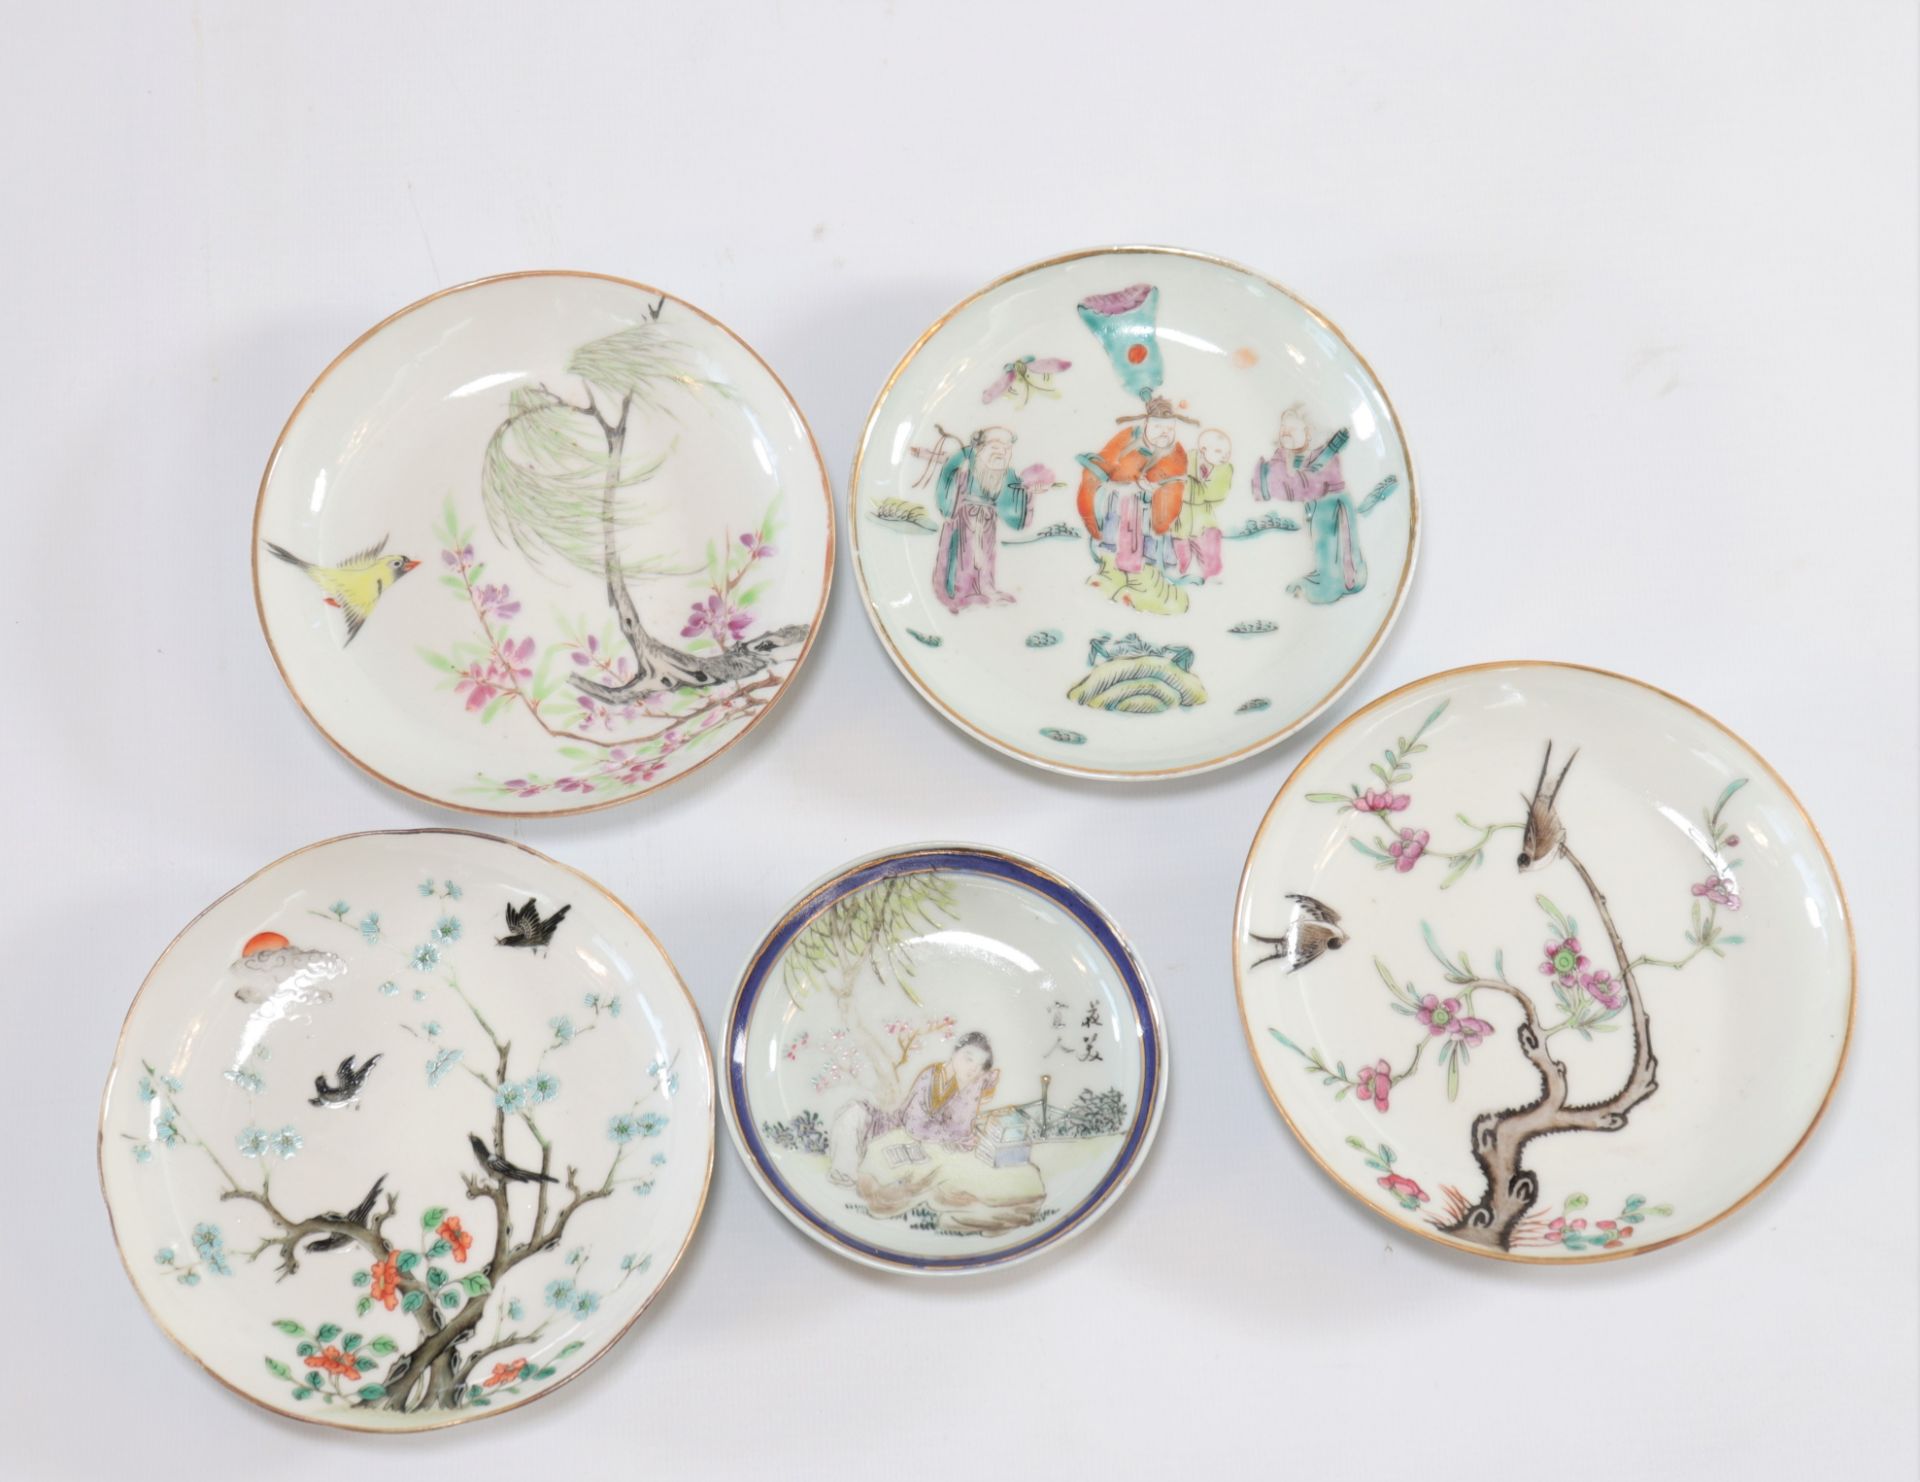 Set of 5 Chinese porcelain plates